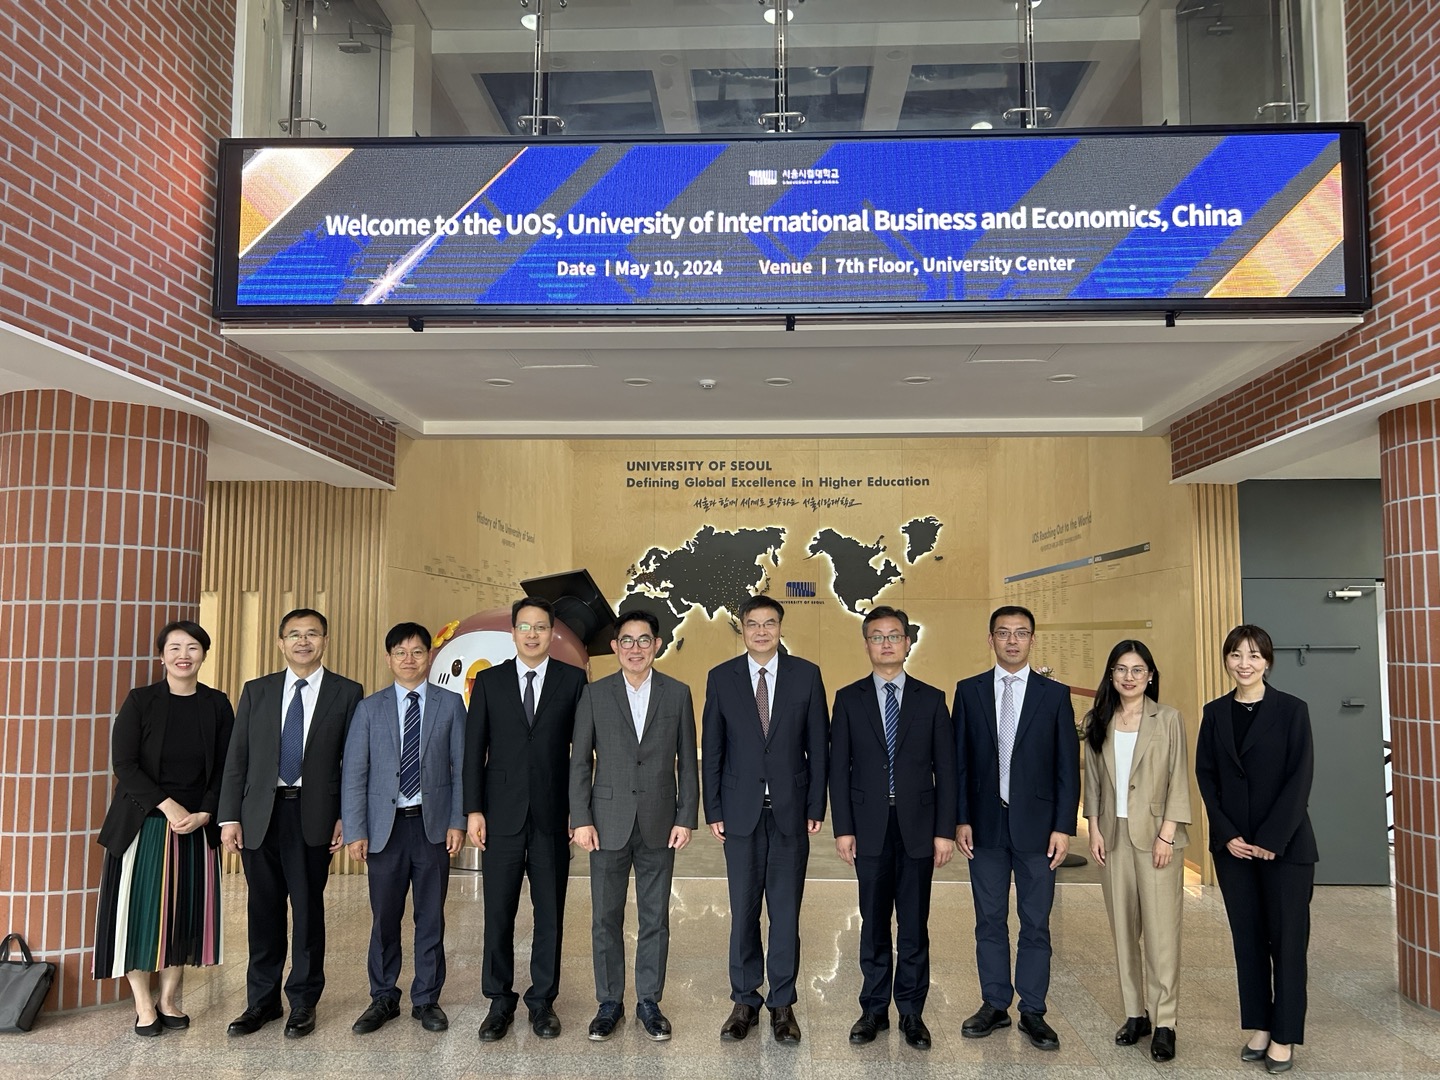 University of International Business and Economics, China, visited UOS